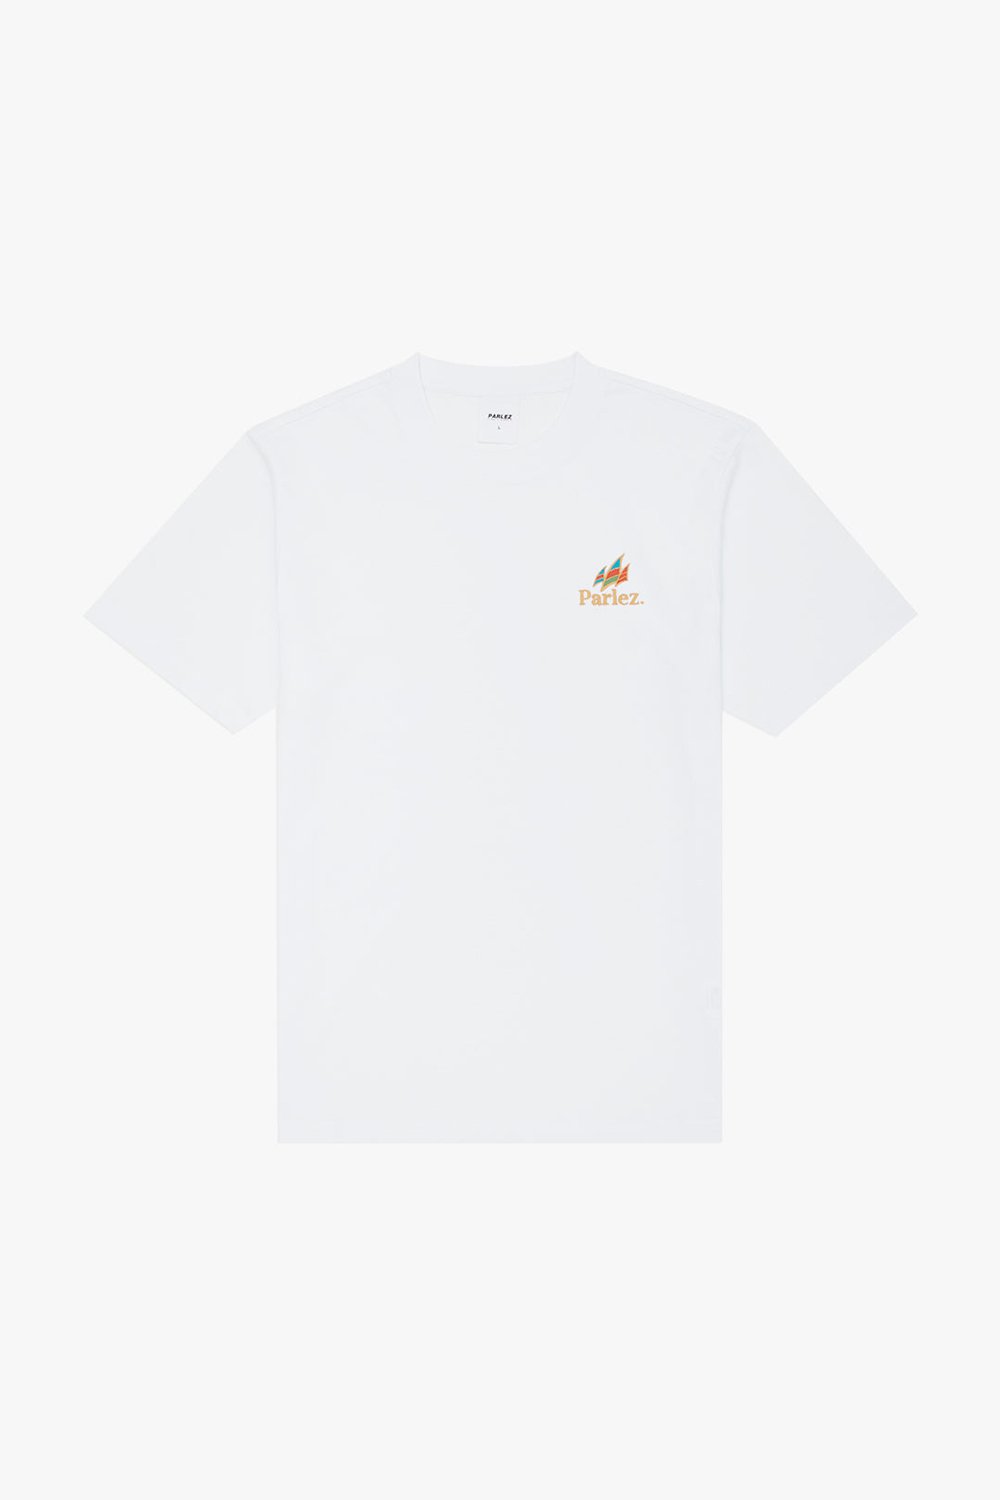 Wanstead T Shirt White (PRLZ-1)